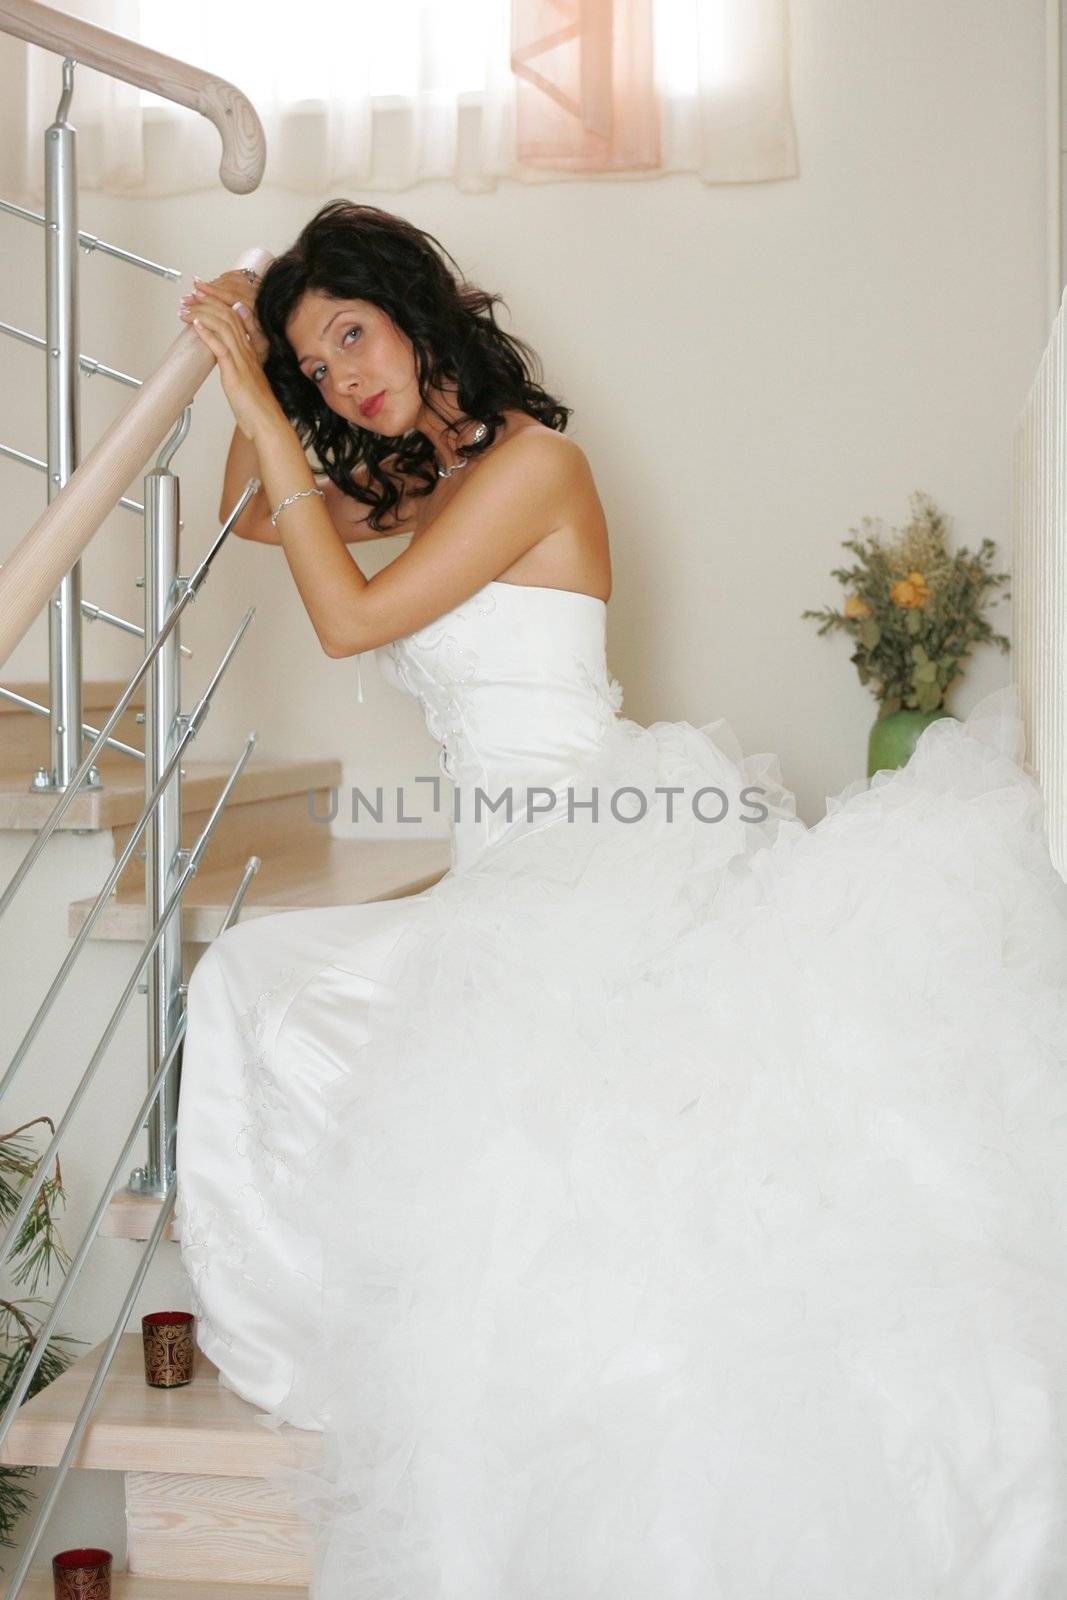 Bride wearing long white dress by speedfighter